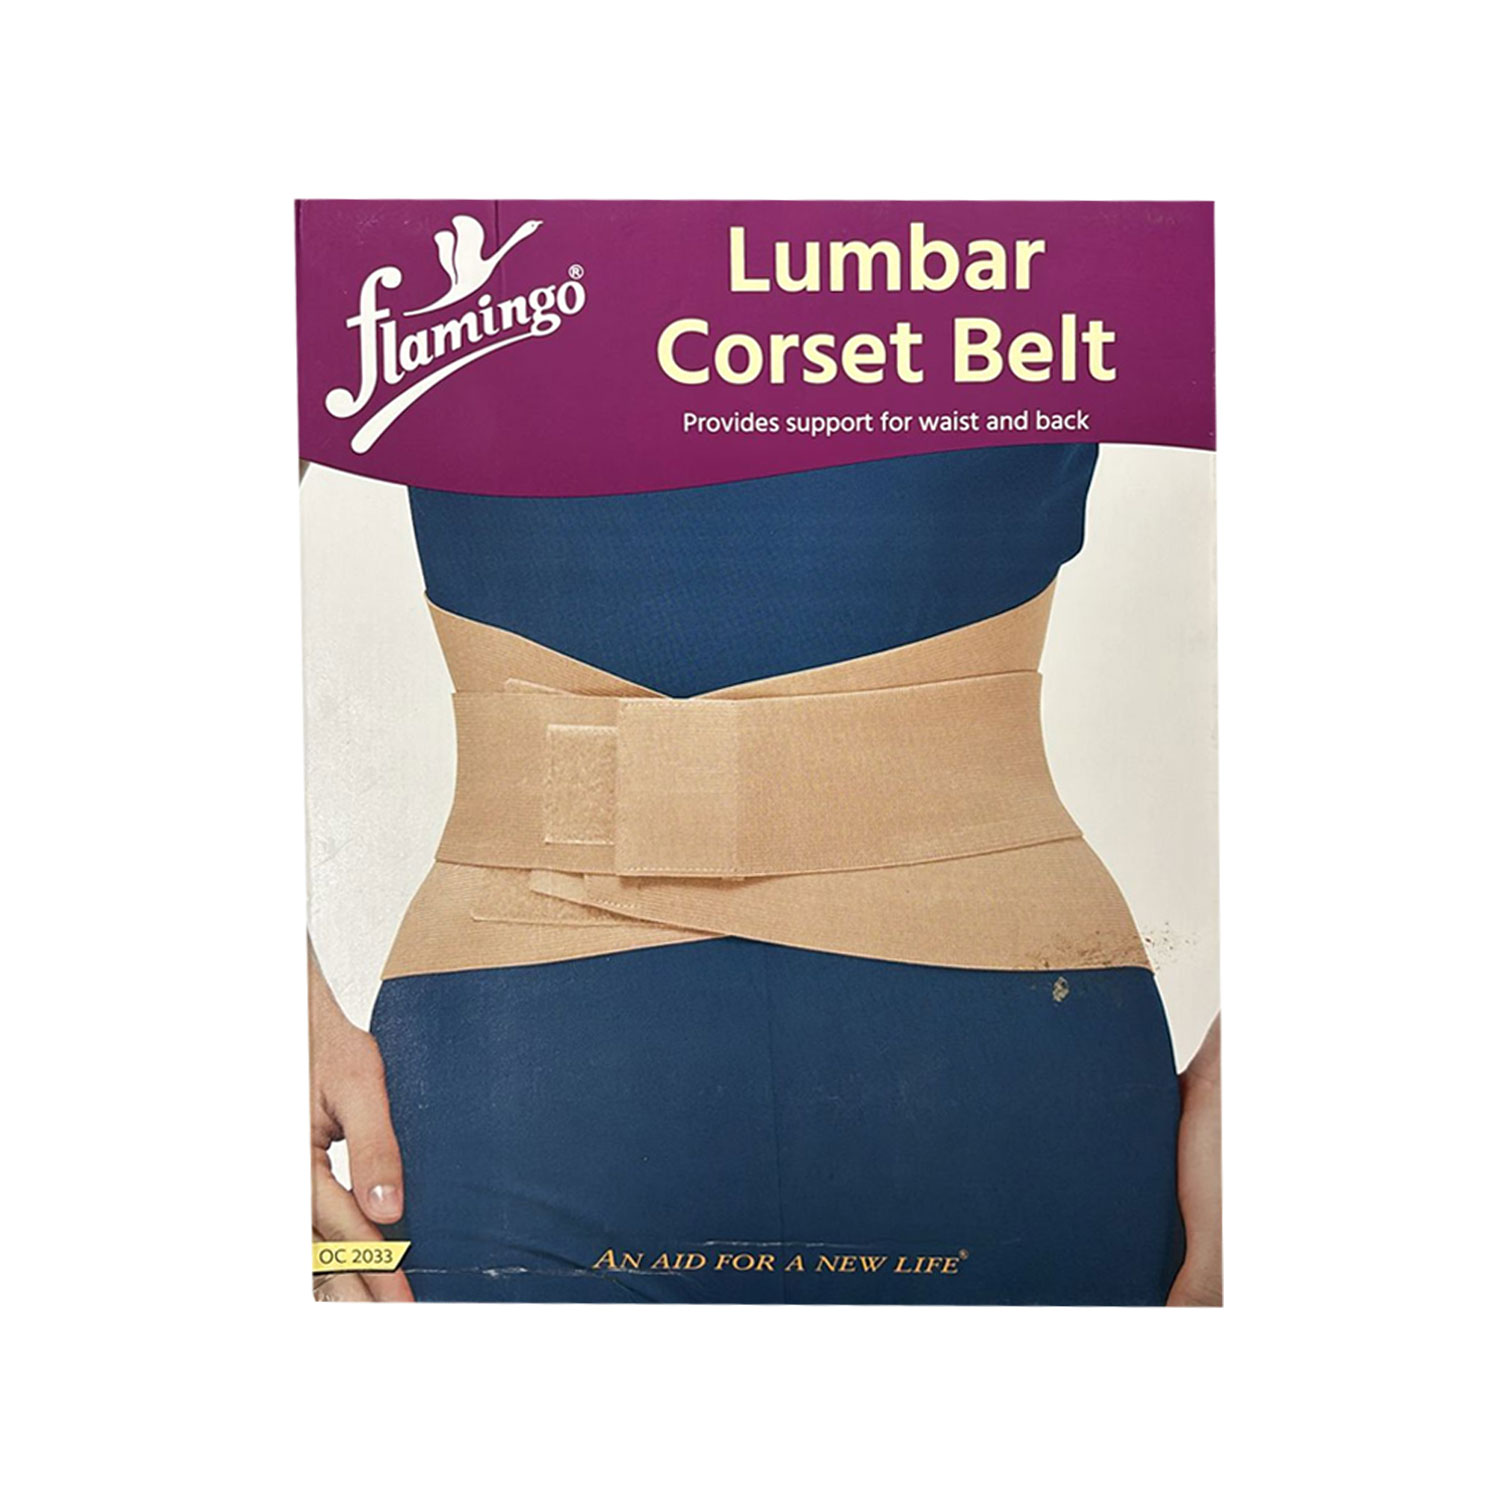 Flamingo Lumbar Corset Belt large OC2033, Best ls corset belt